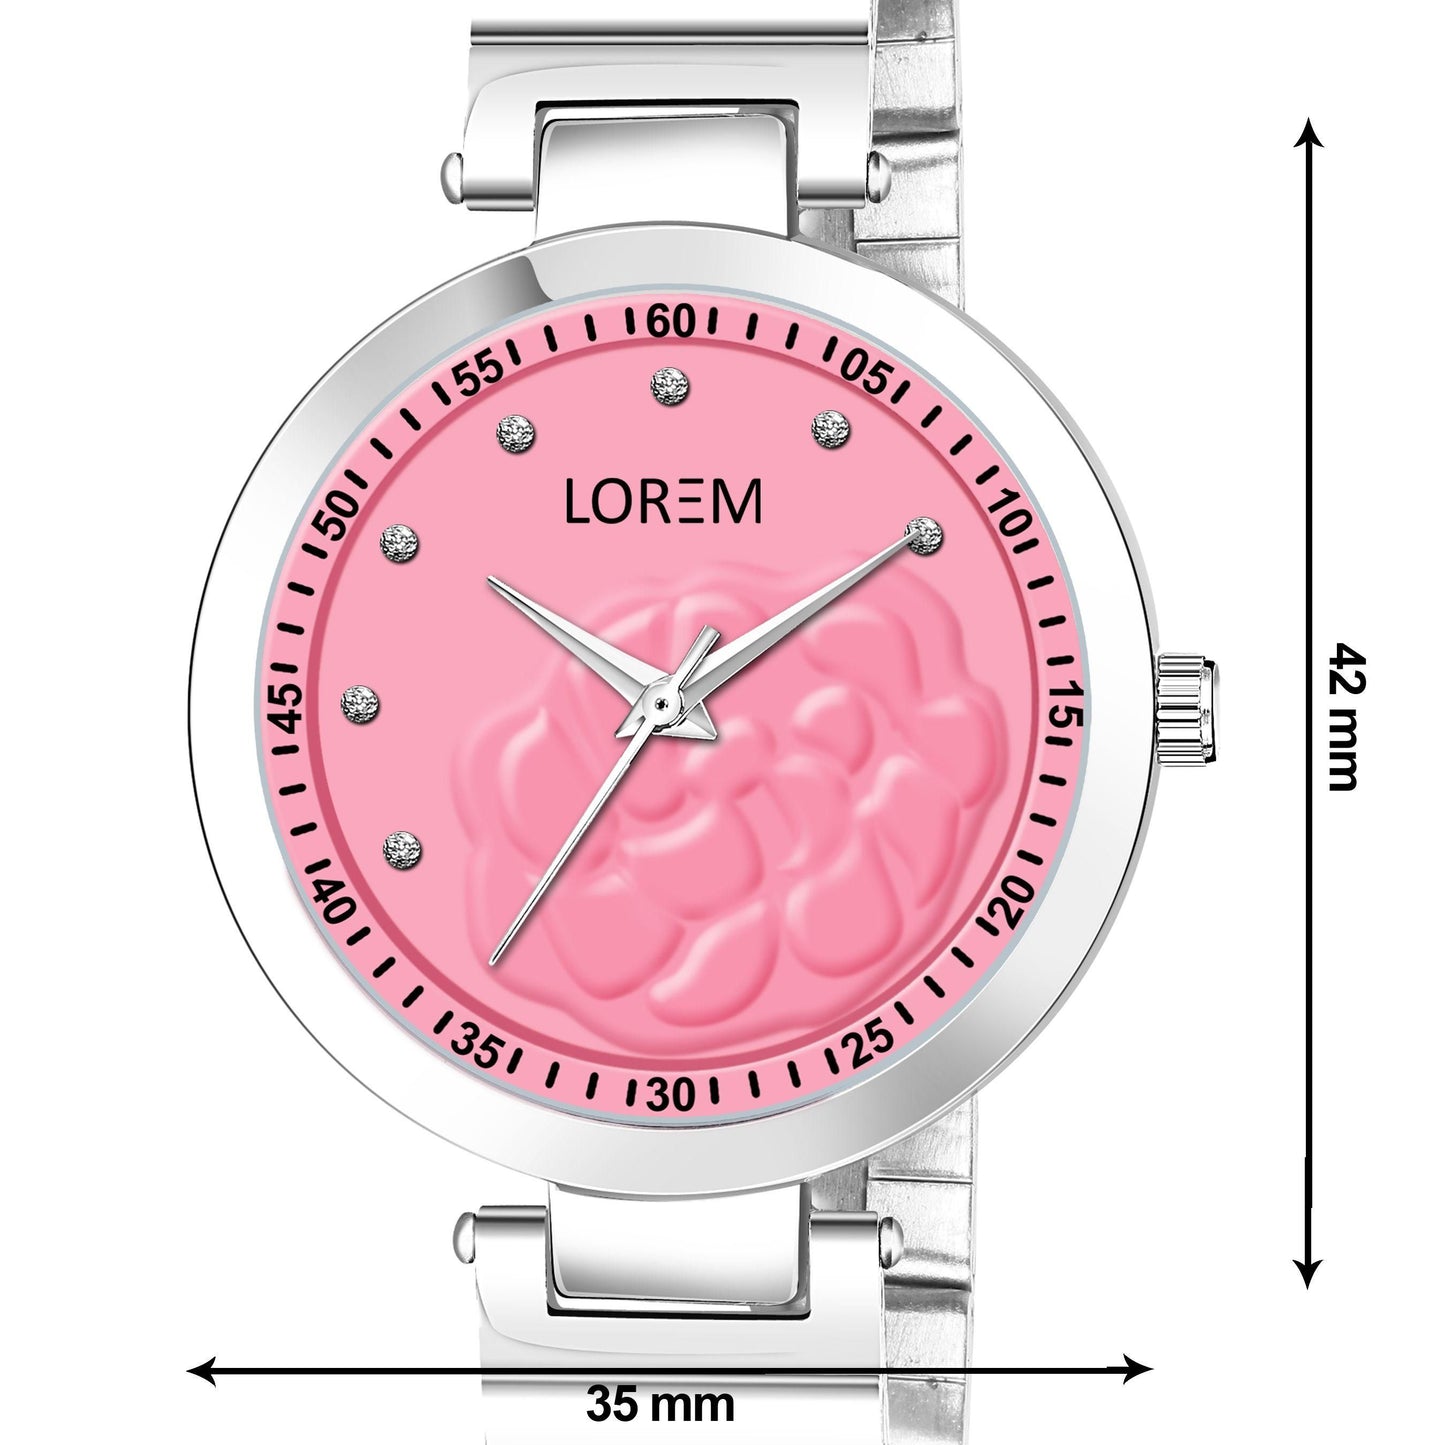 LOREM Pink Fancy Analog Watch